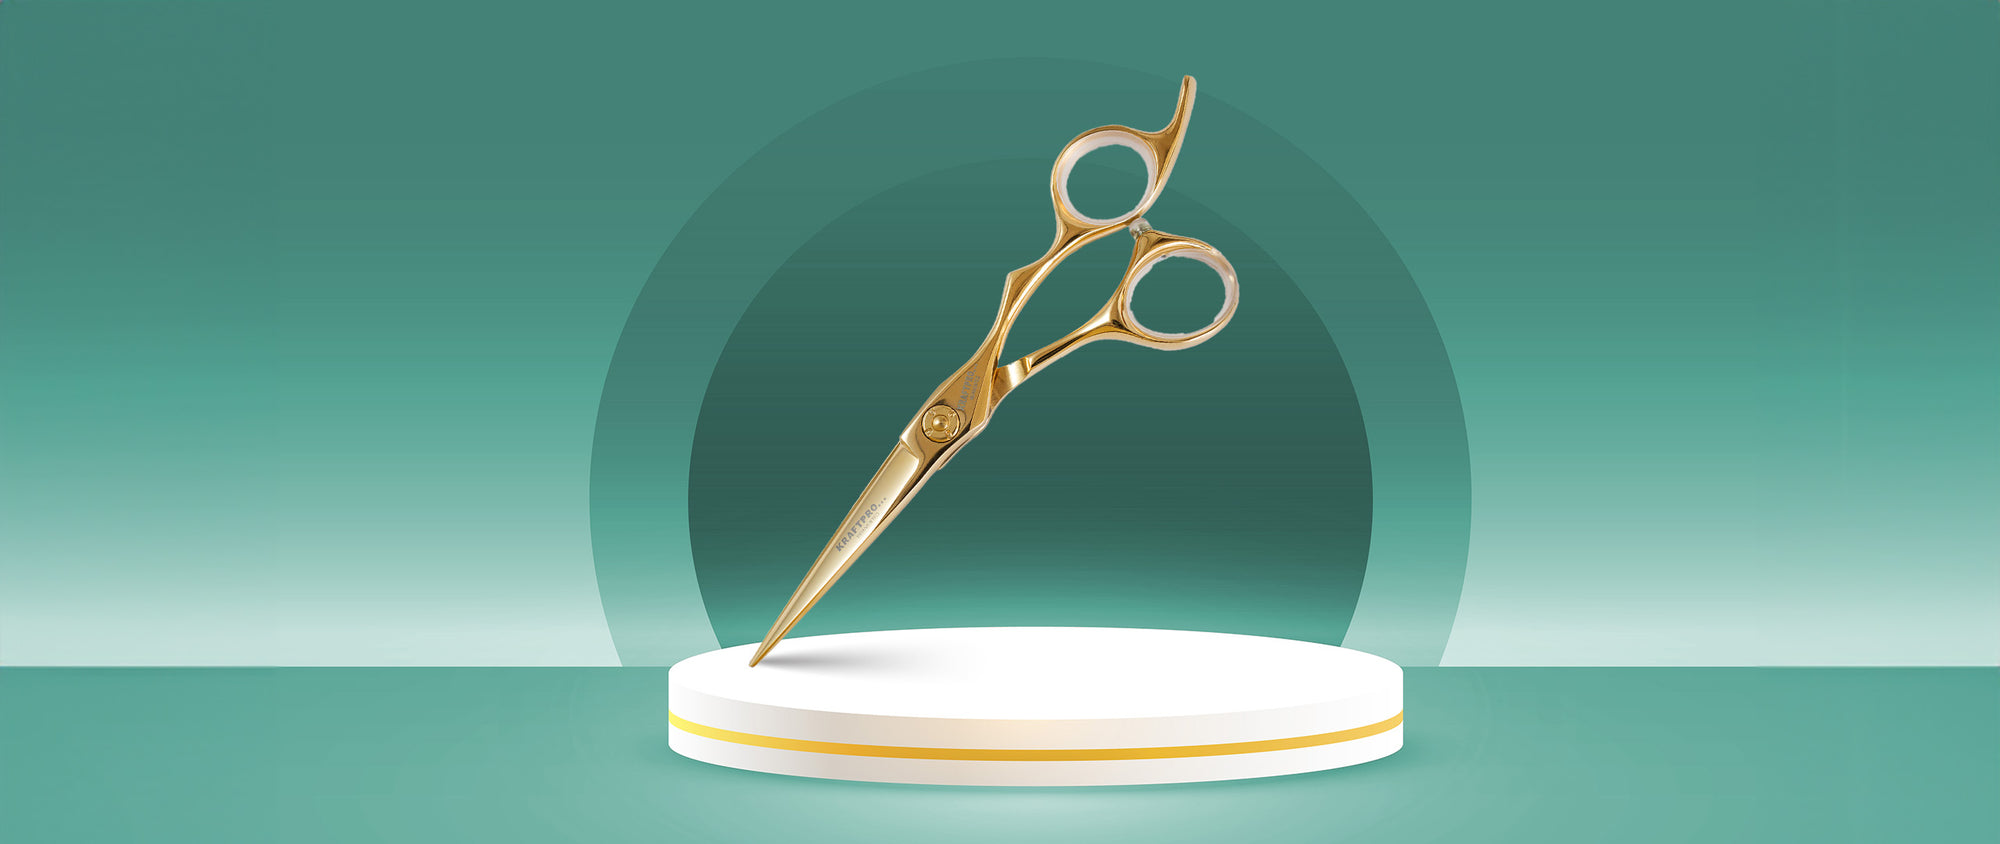 Scissors, Salon Scissors, Hair Styling Products